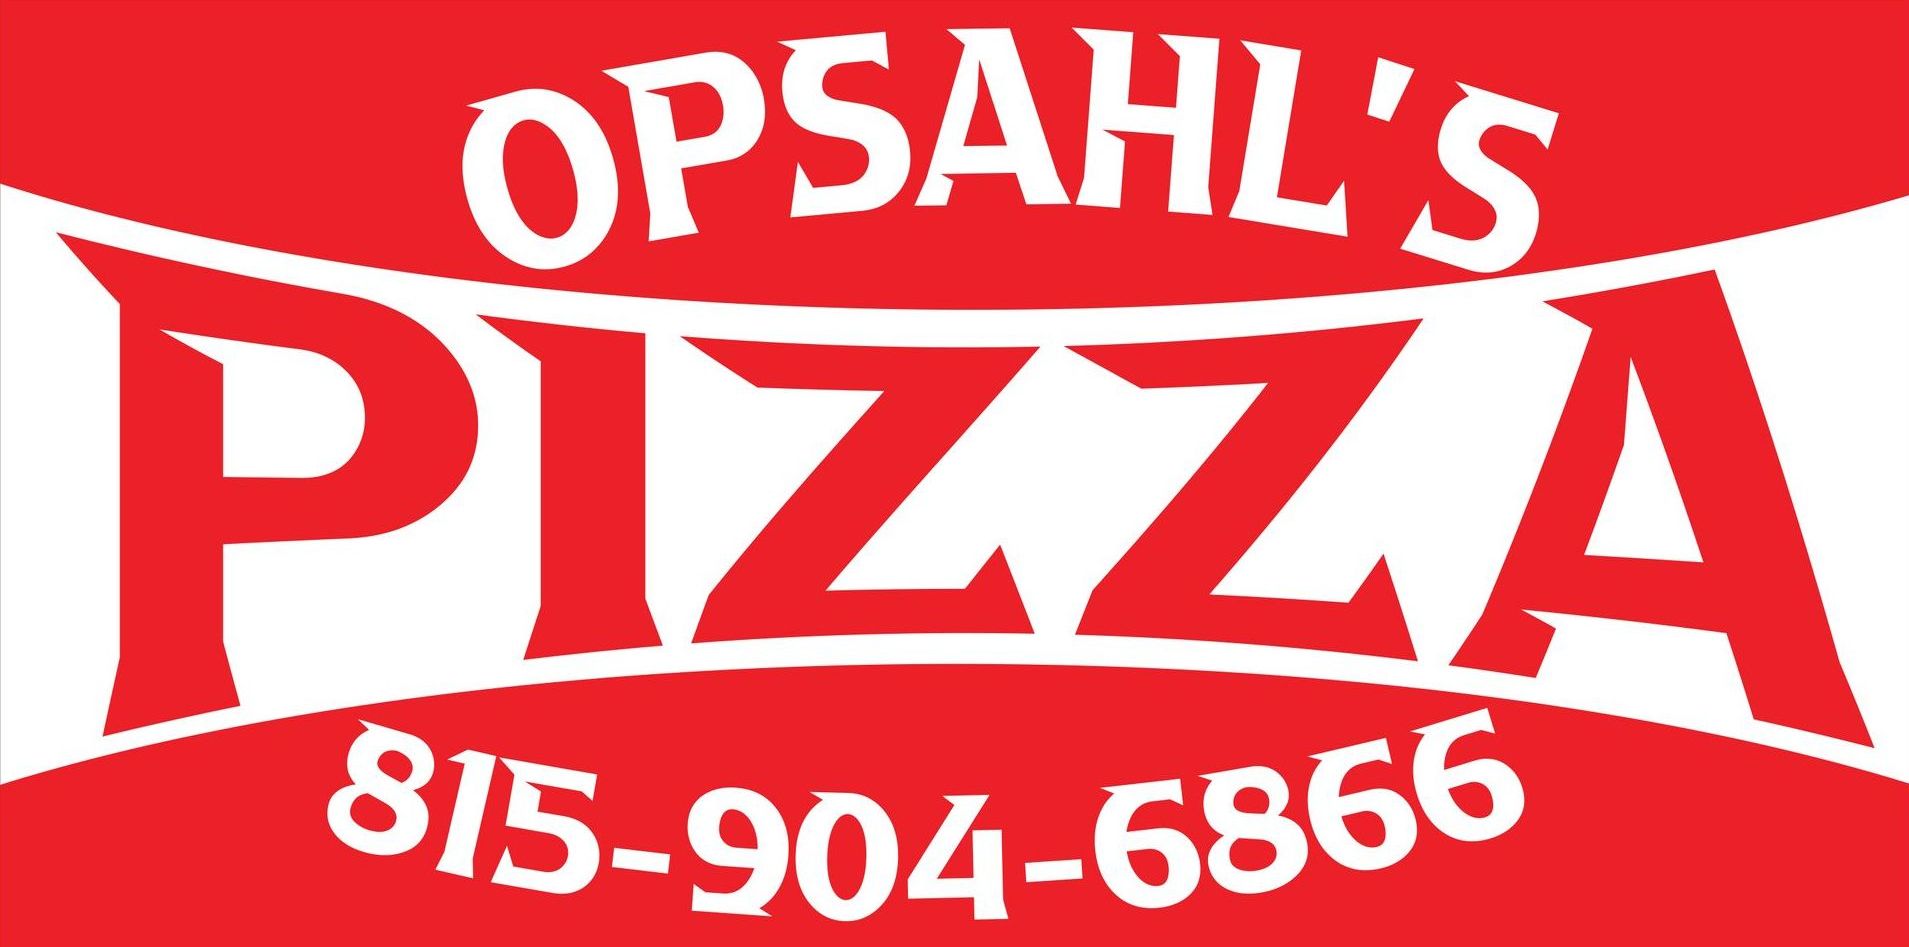 The Original Opsahl's Pizza logo